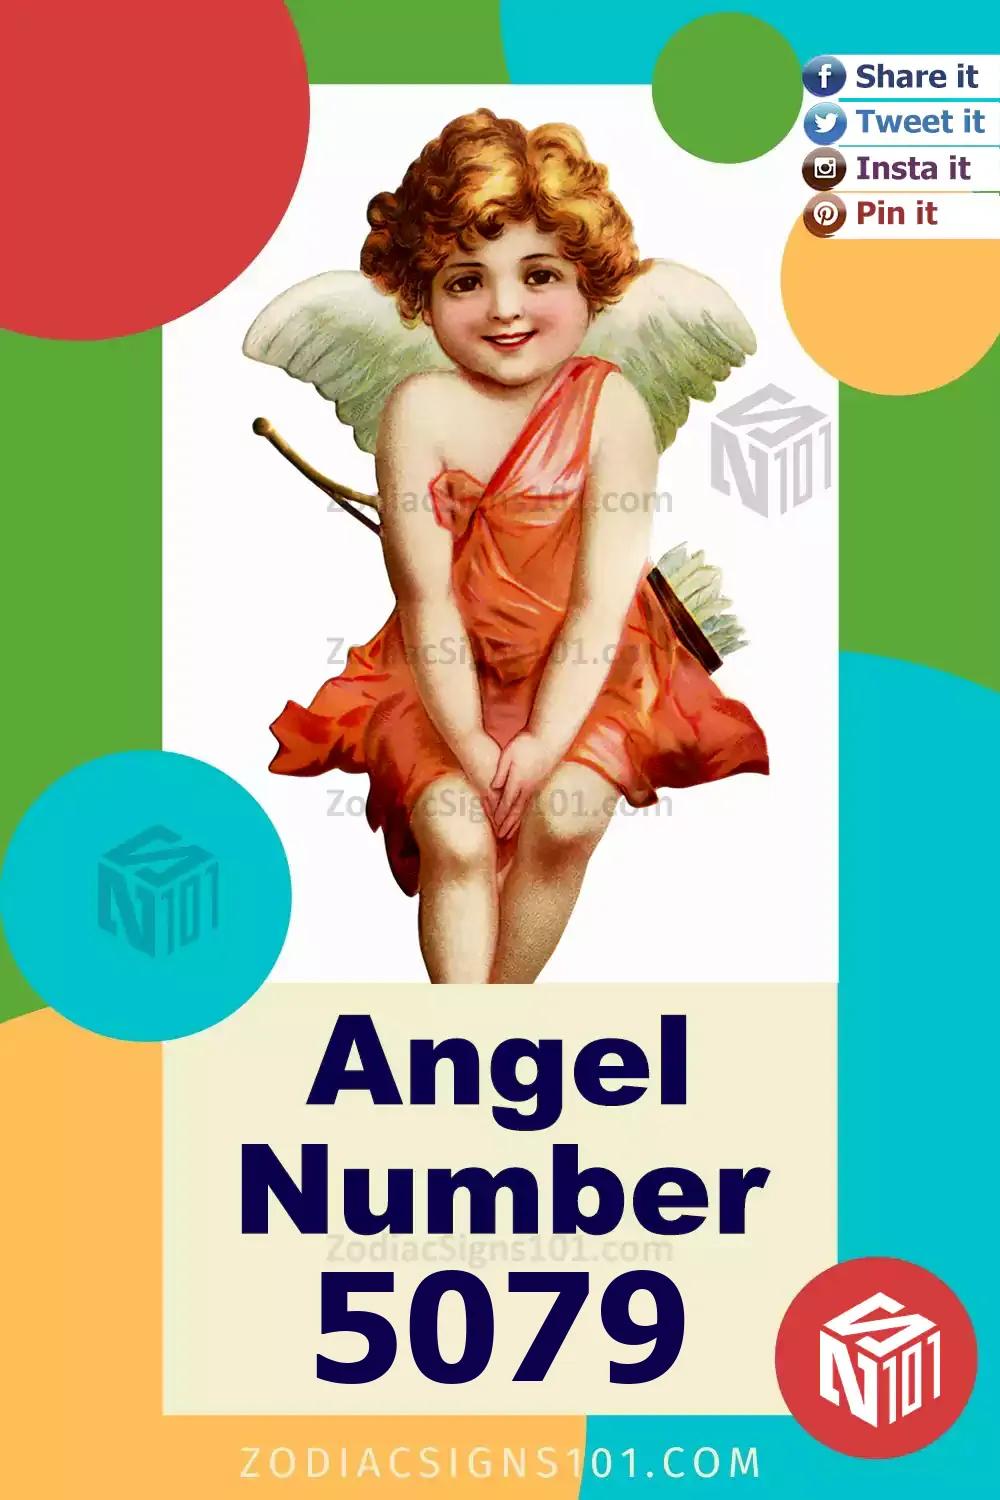 5079-Angel-Number-Meaning.jpg